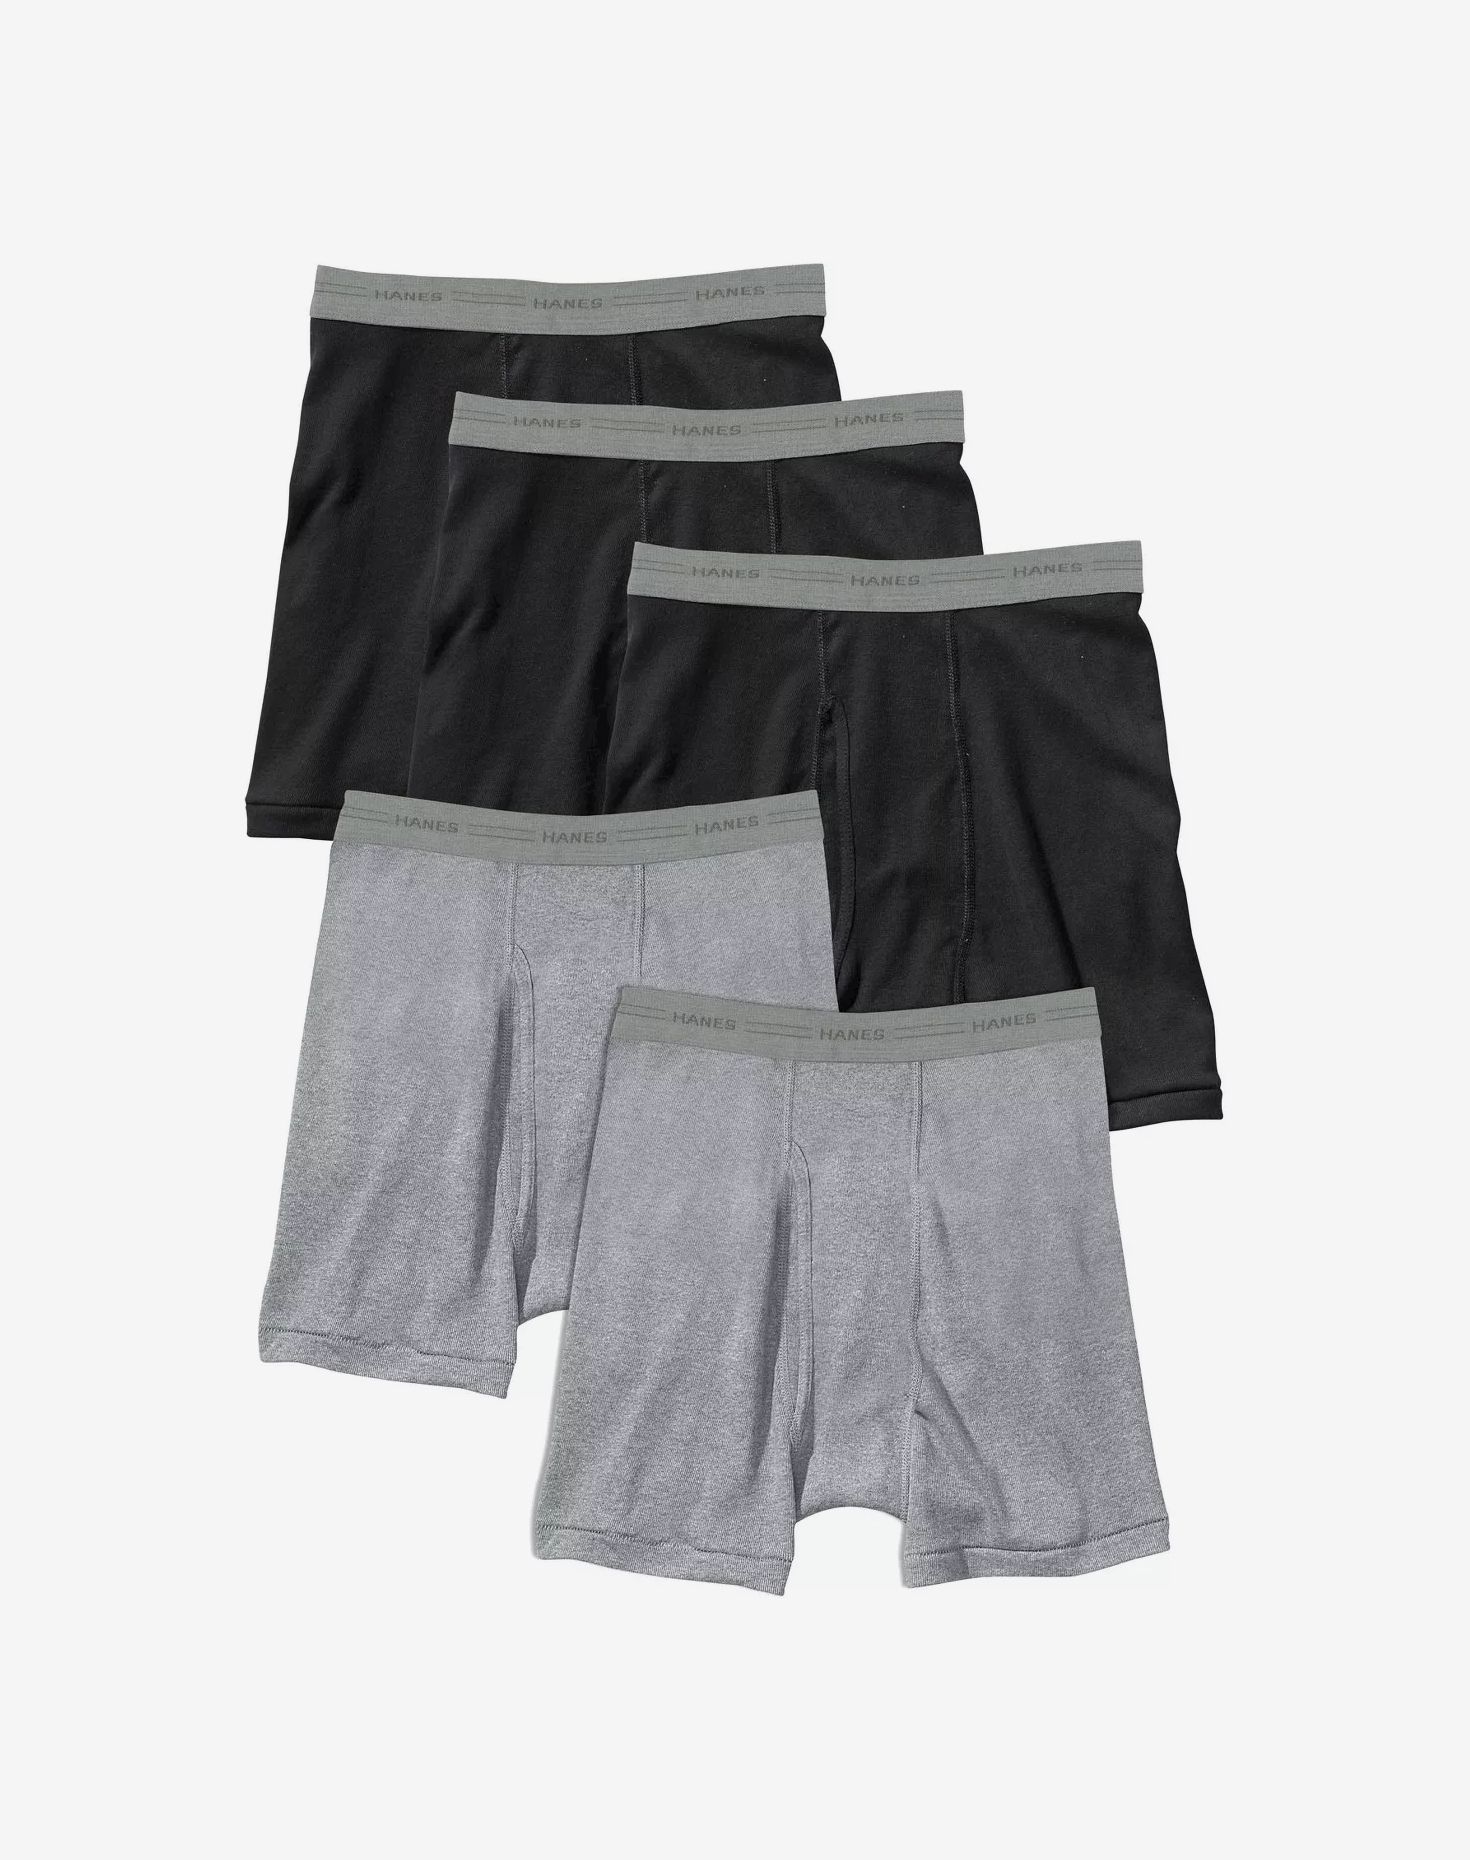 BEST Louis Vuitton Men Underwear • Shirtnation - Shop trending t